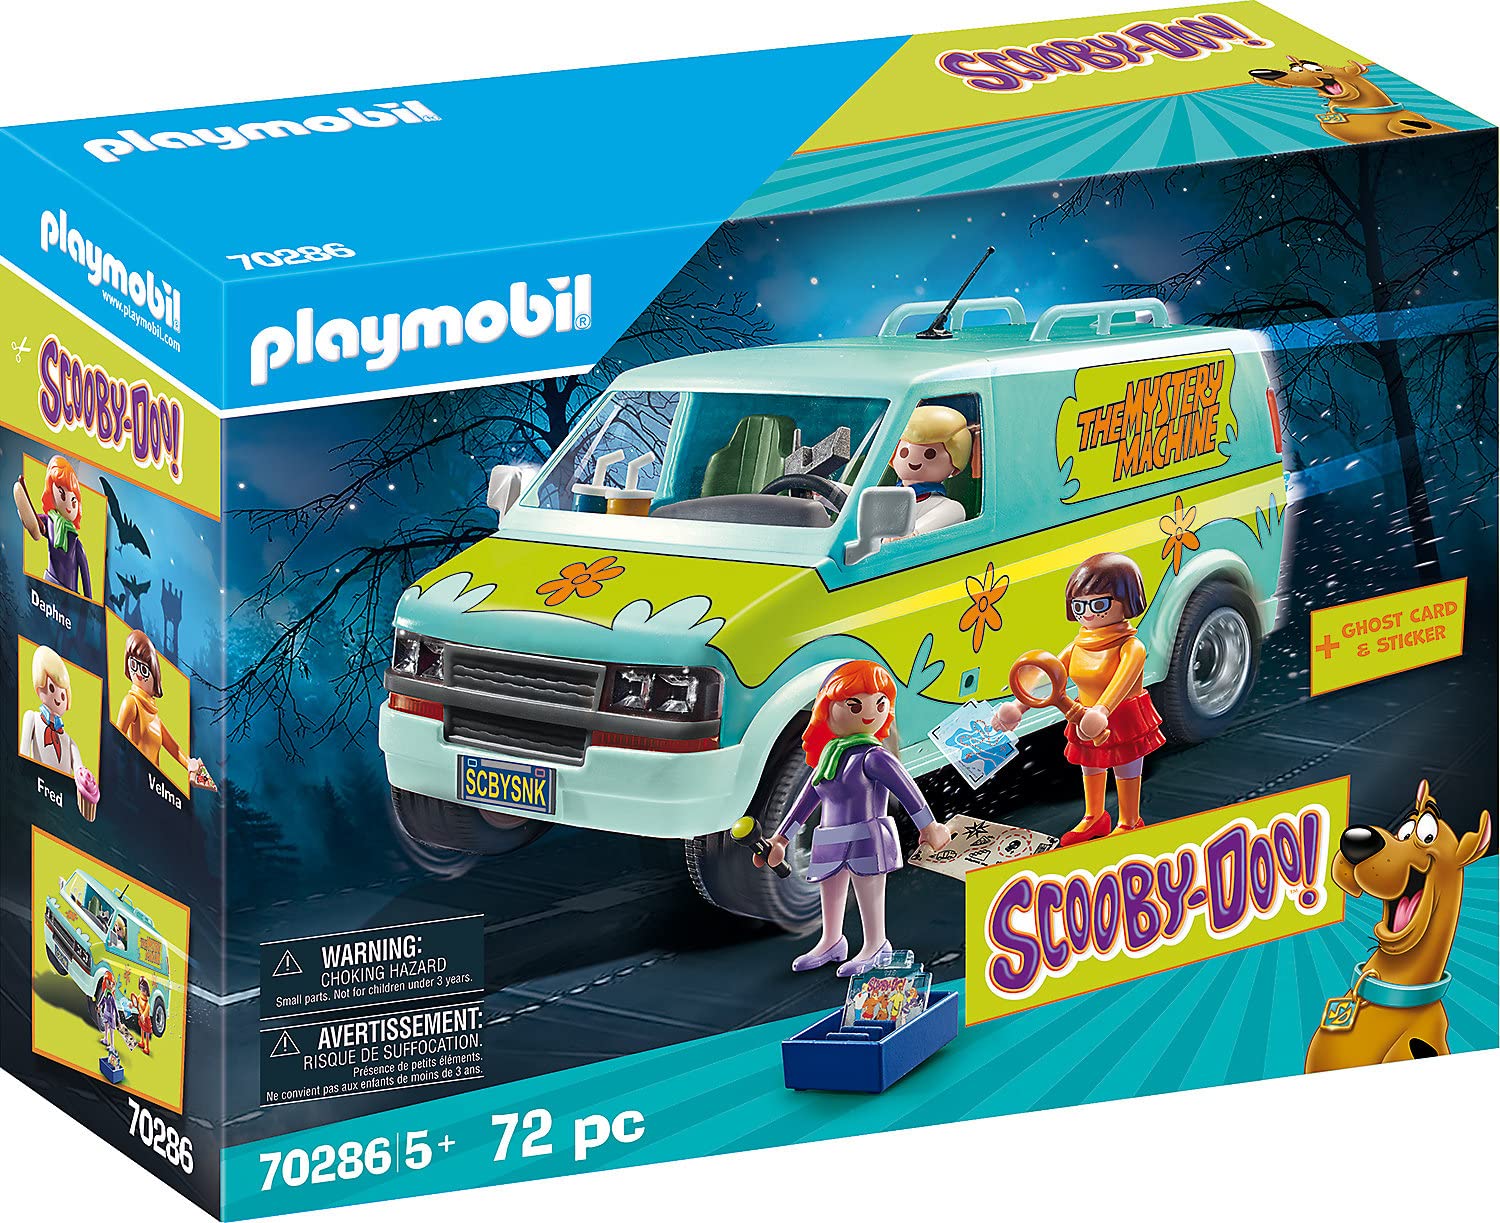 Playmobil Scooby-DOO! Mystery Machine $31.99 at Amazon